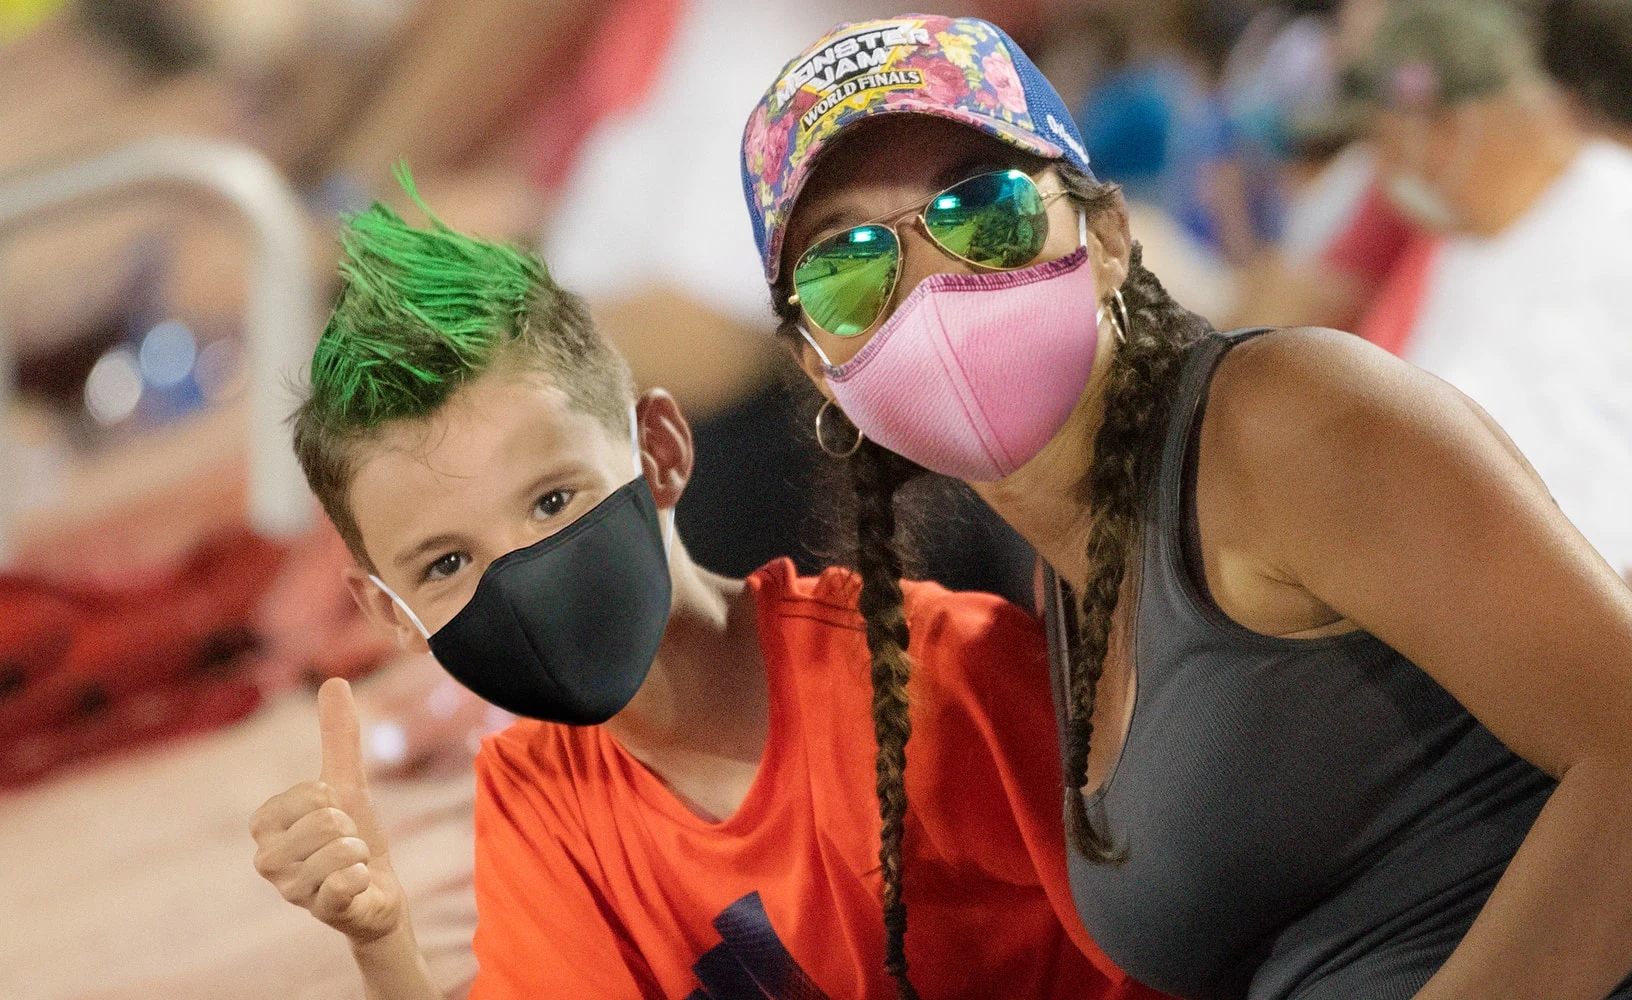 monster jam fans, mom and son in masks